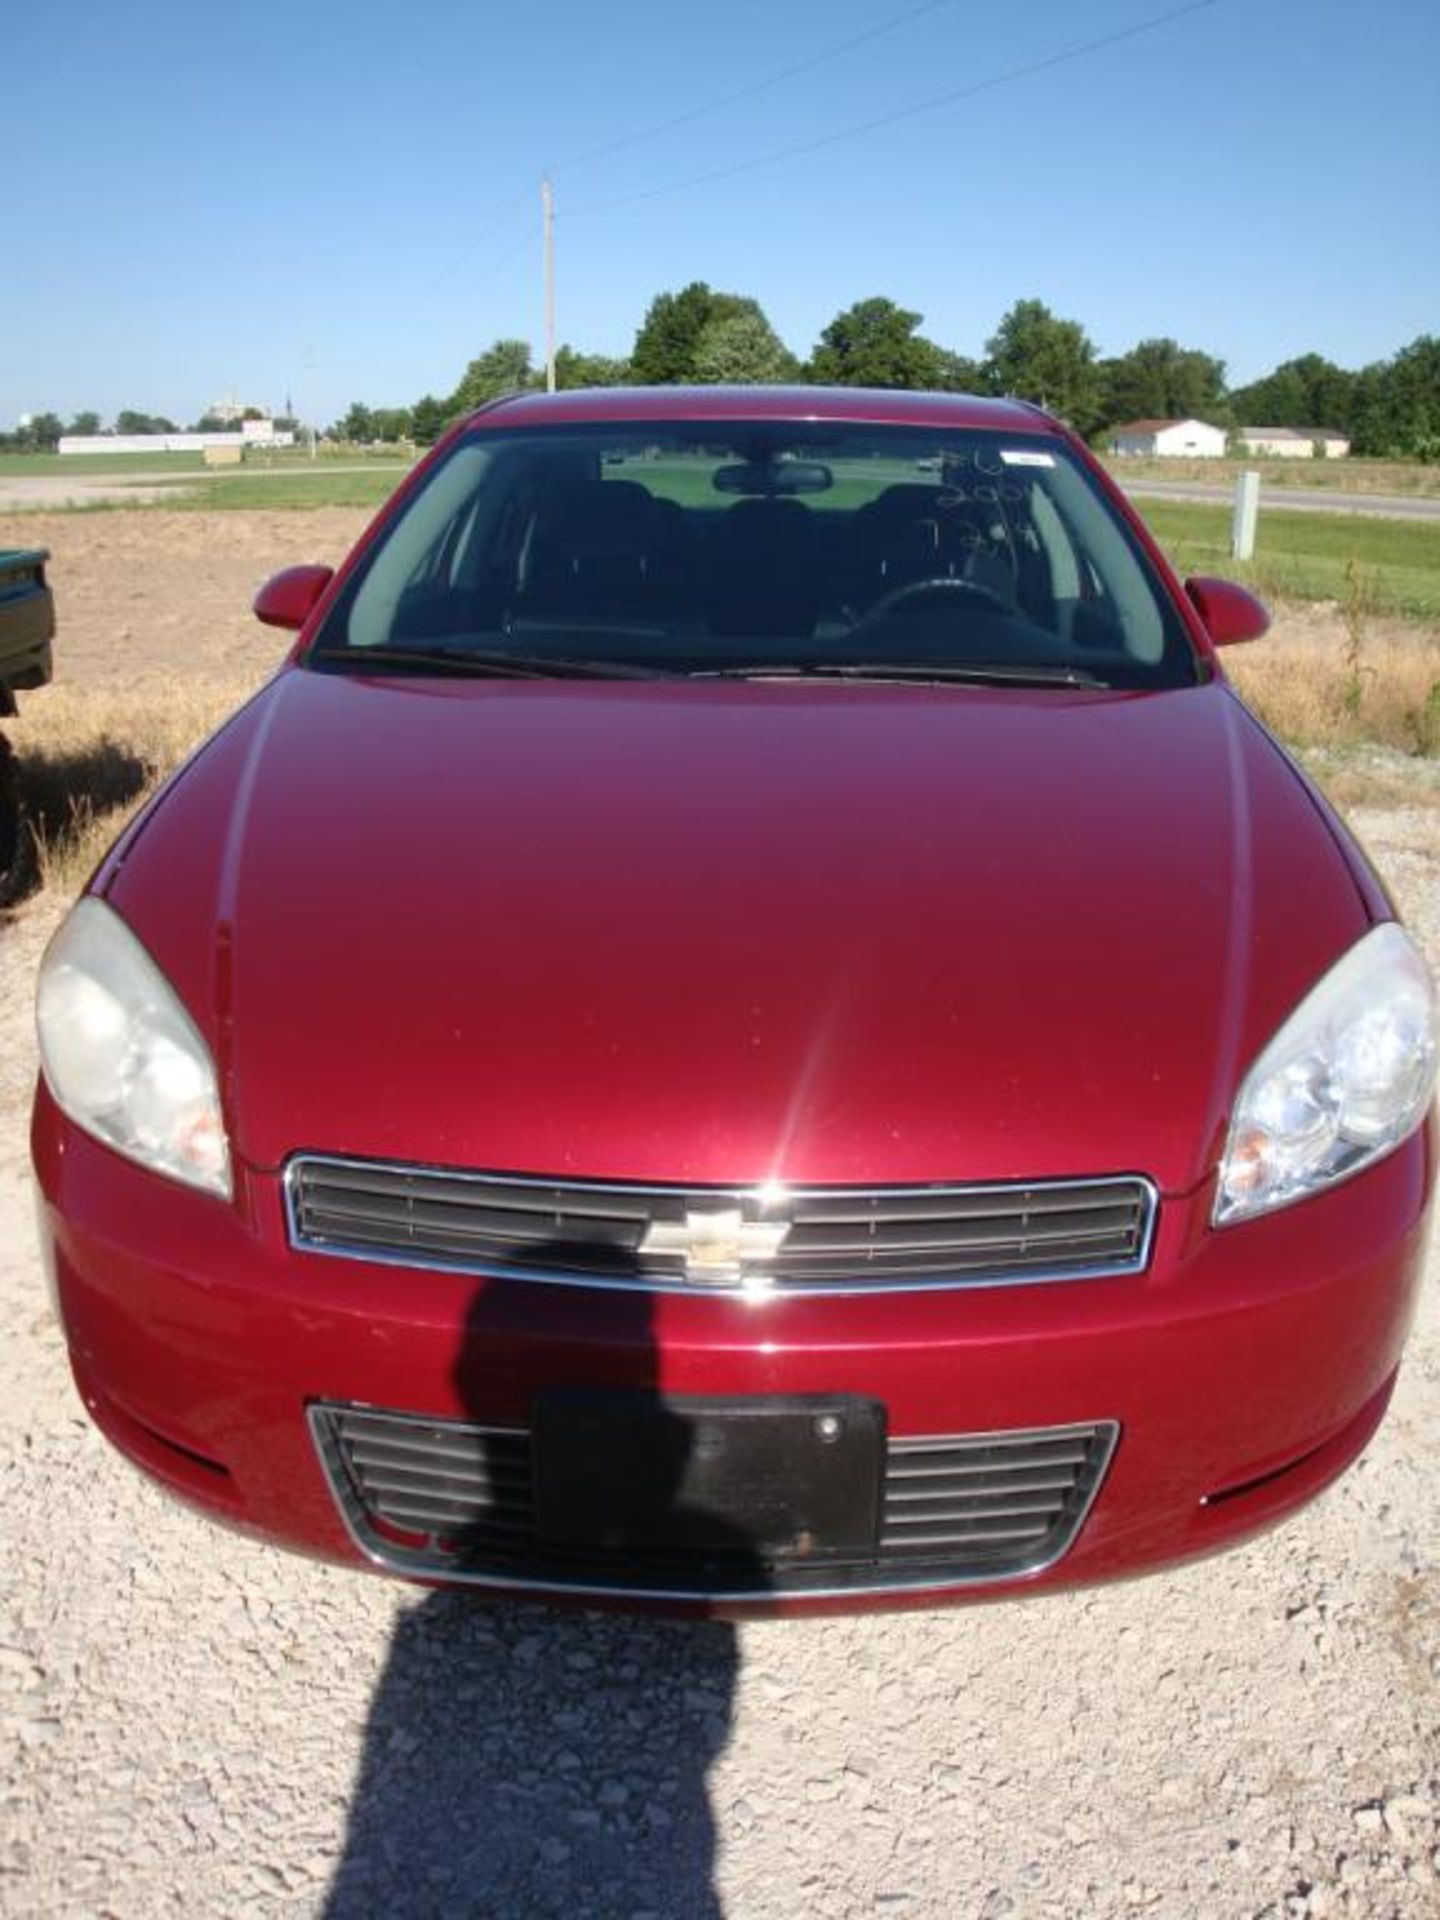 (Title) 2006 Chevrolet Impala,vin 2G1WT58K869365554, 3.5L V6, 72,141 miles - Image 4 of 20